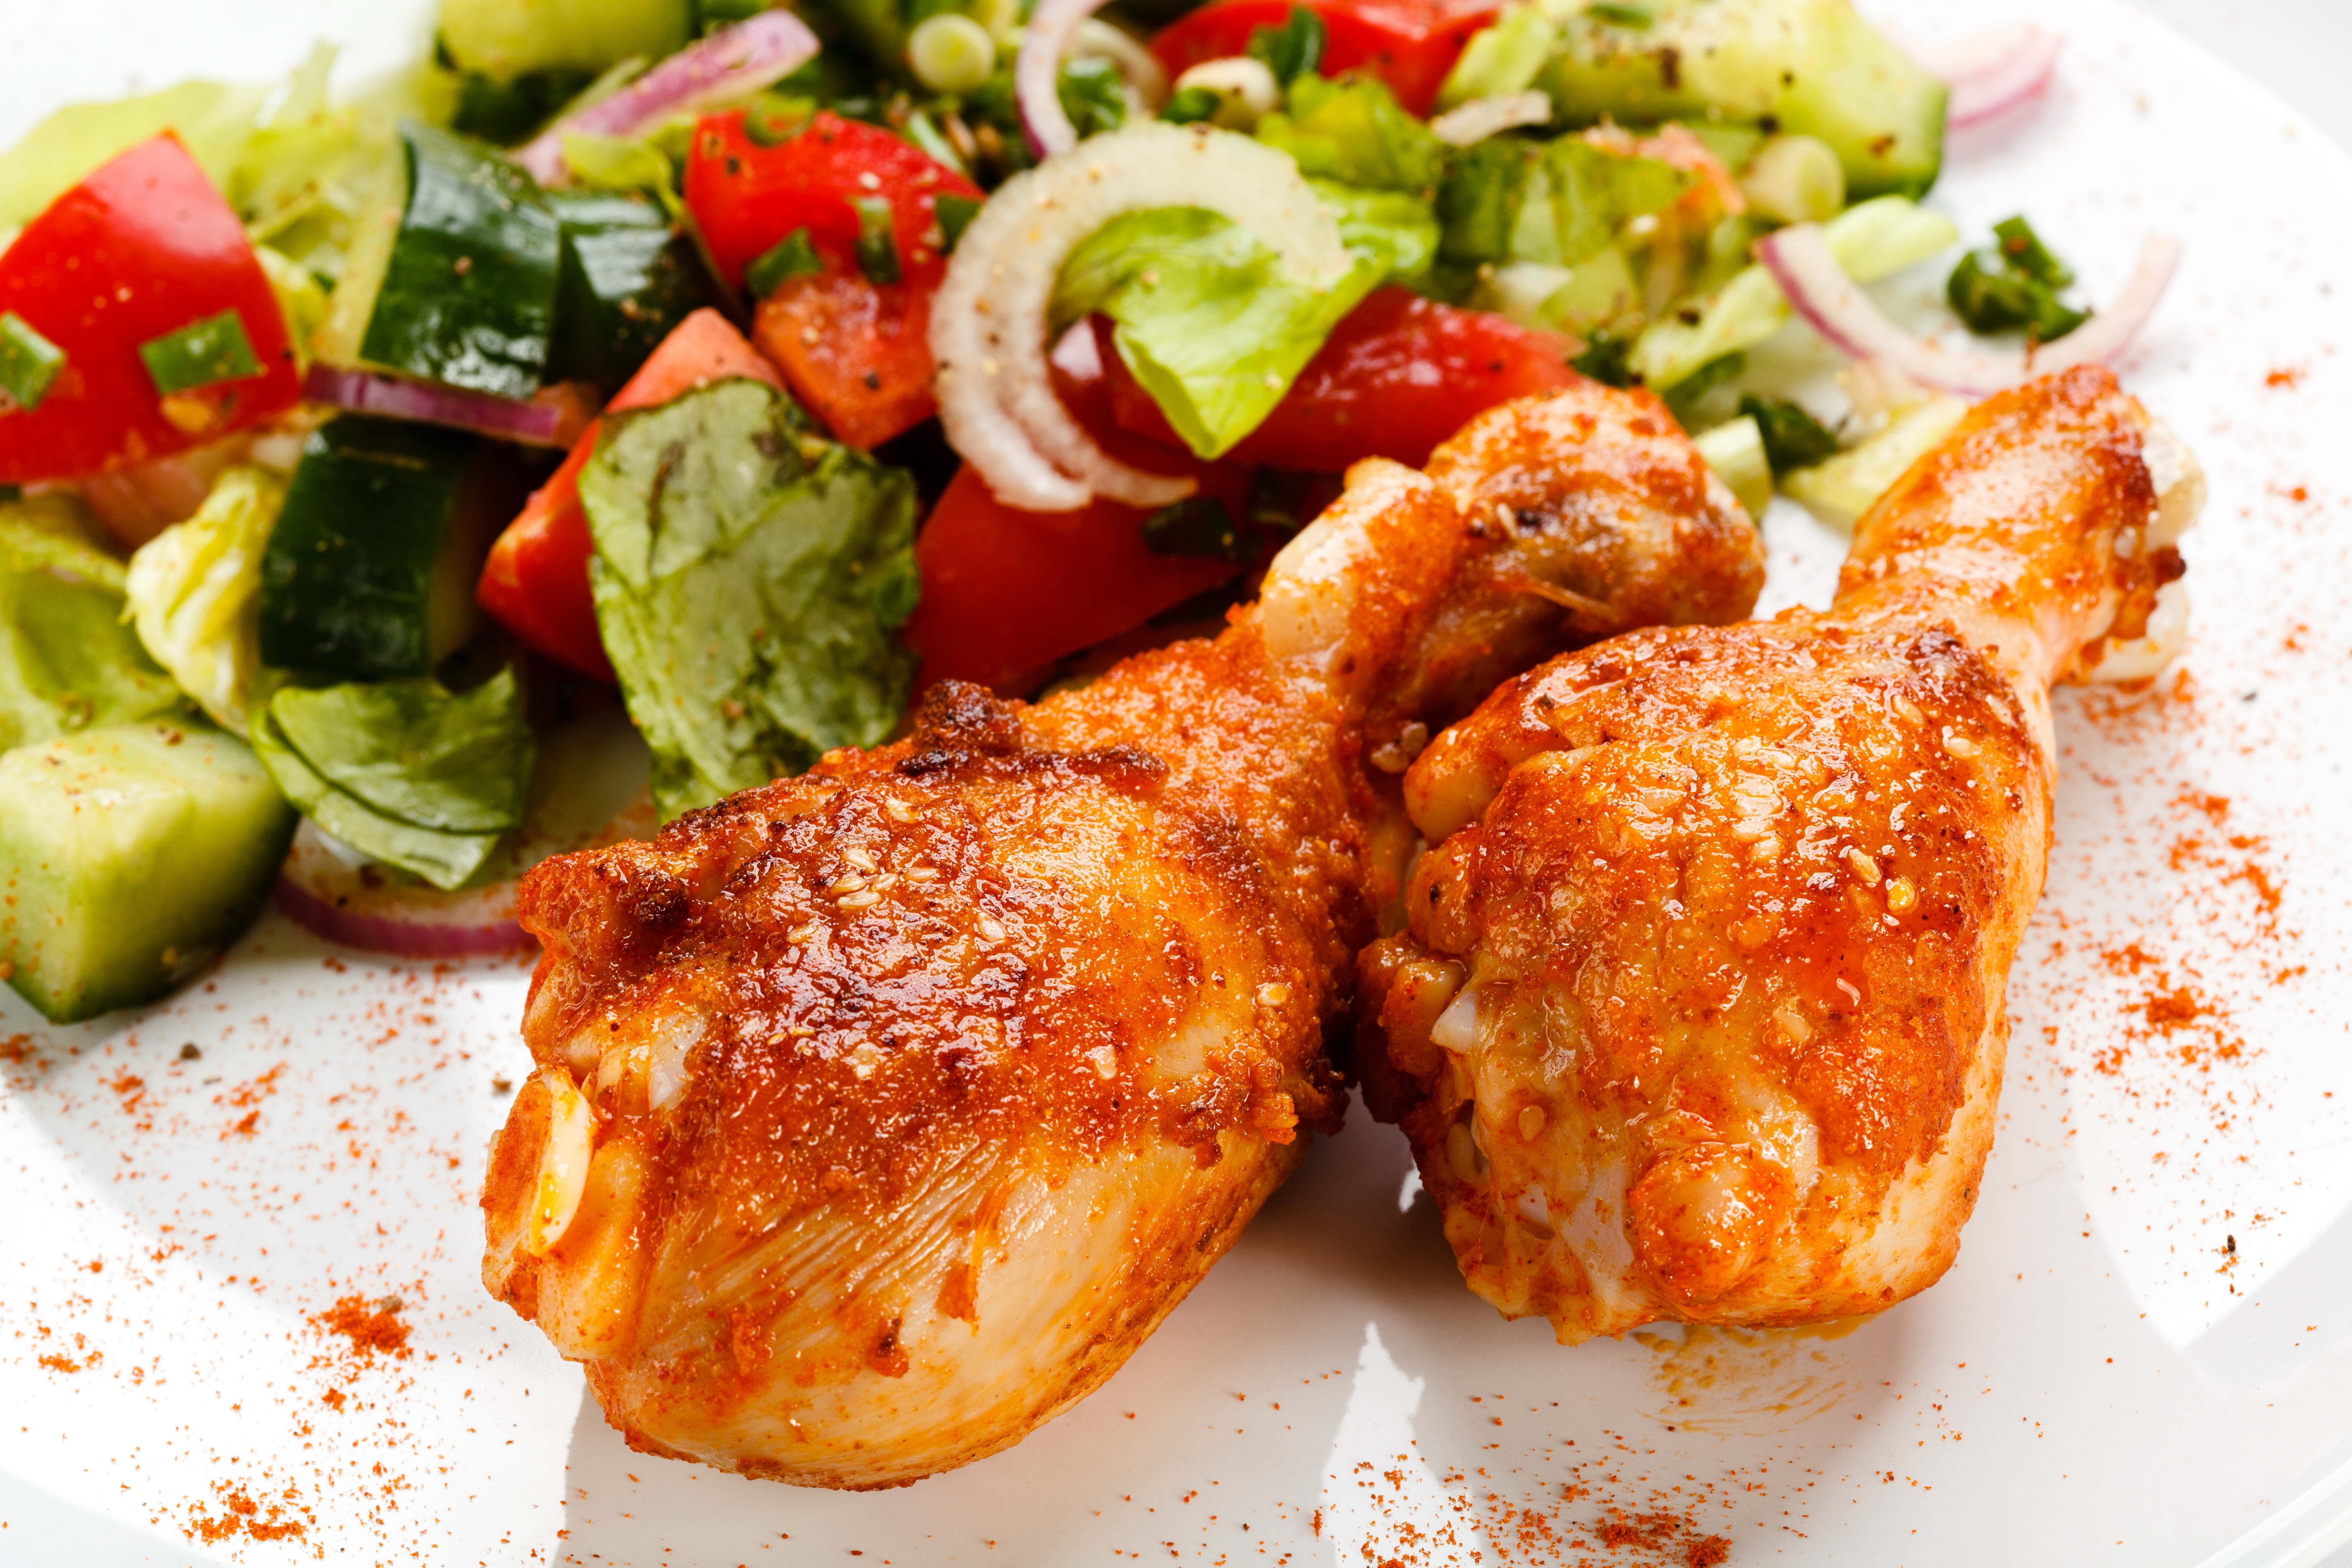 two fried chicken drumsticks, chicken legs, salad, close-up, food